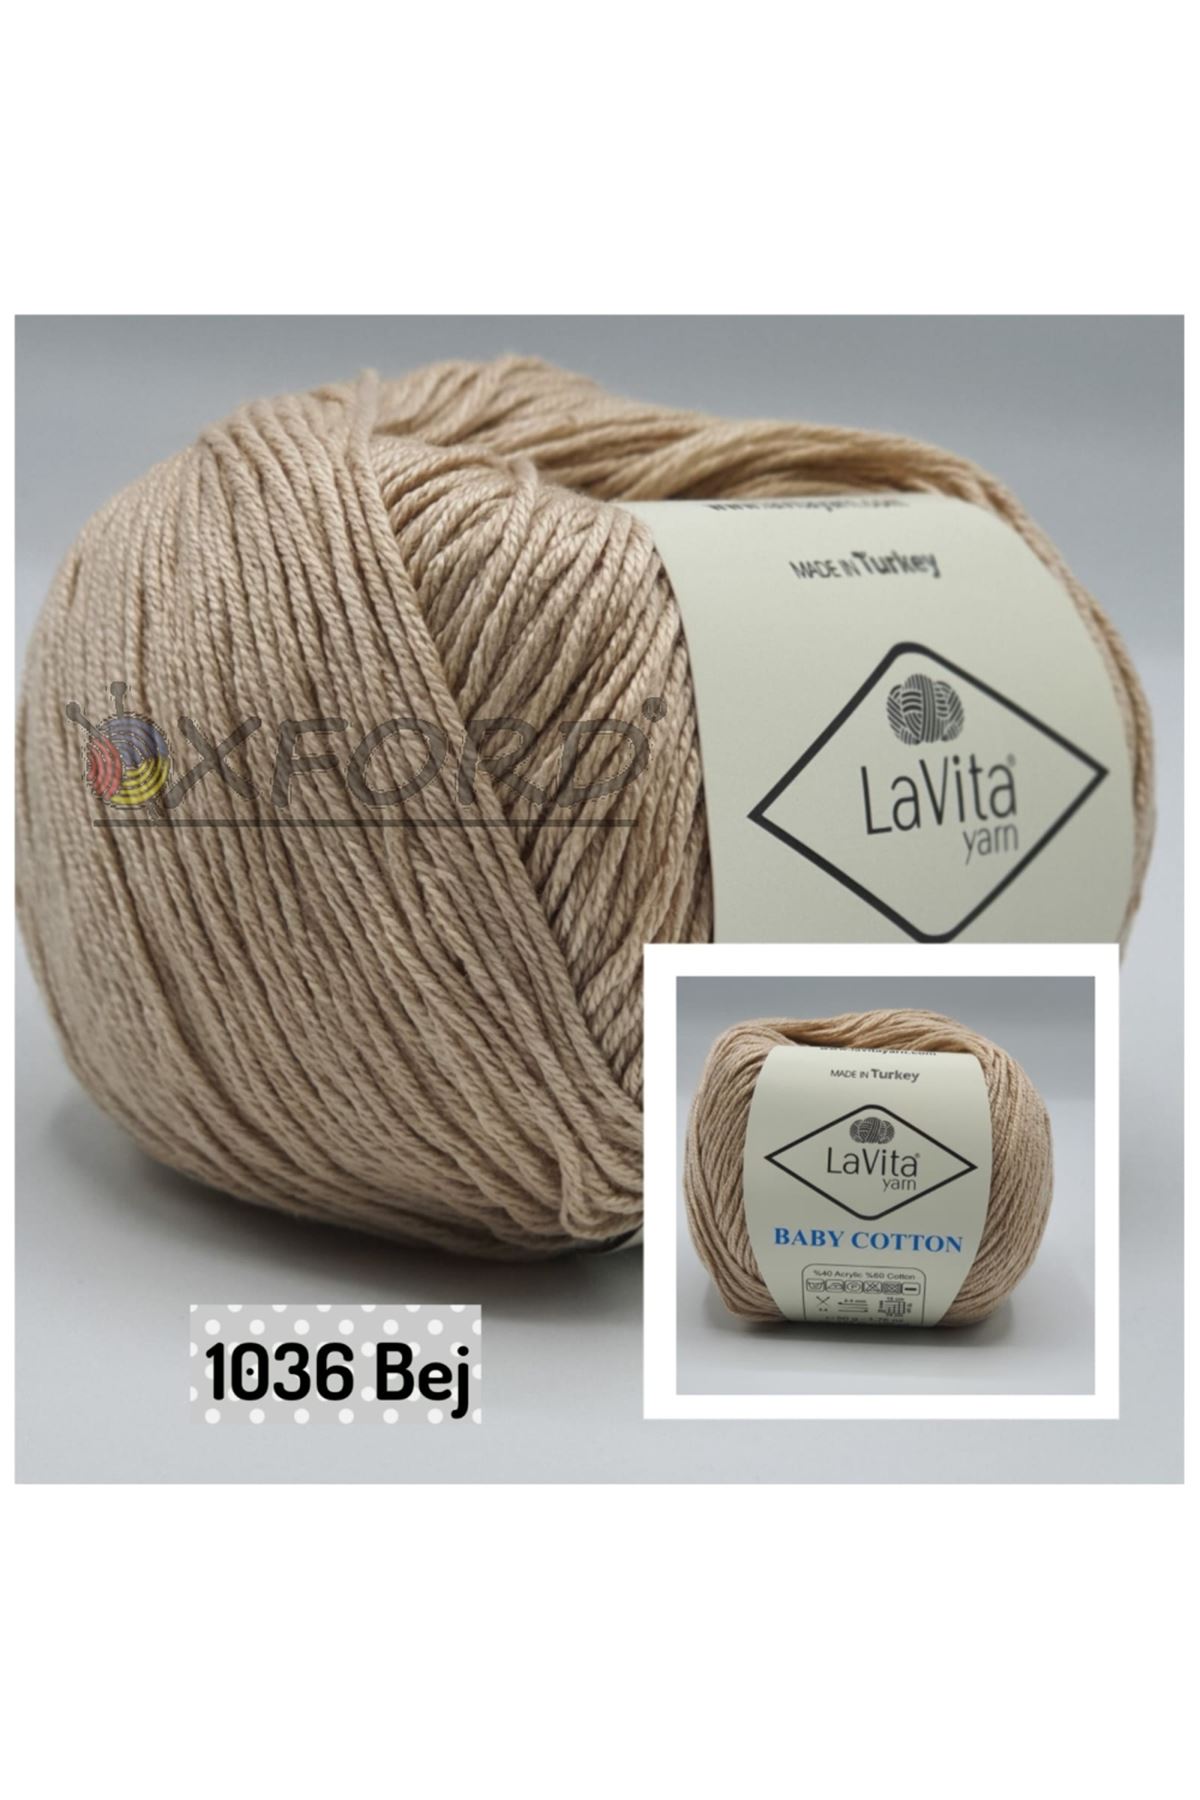 Lavita Baby Cotton 1036 Bej